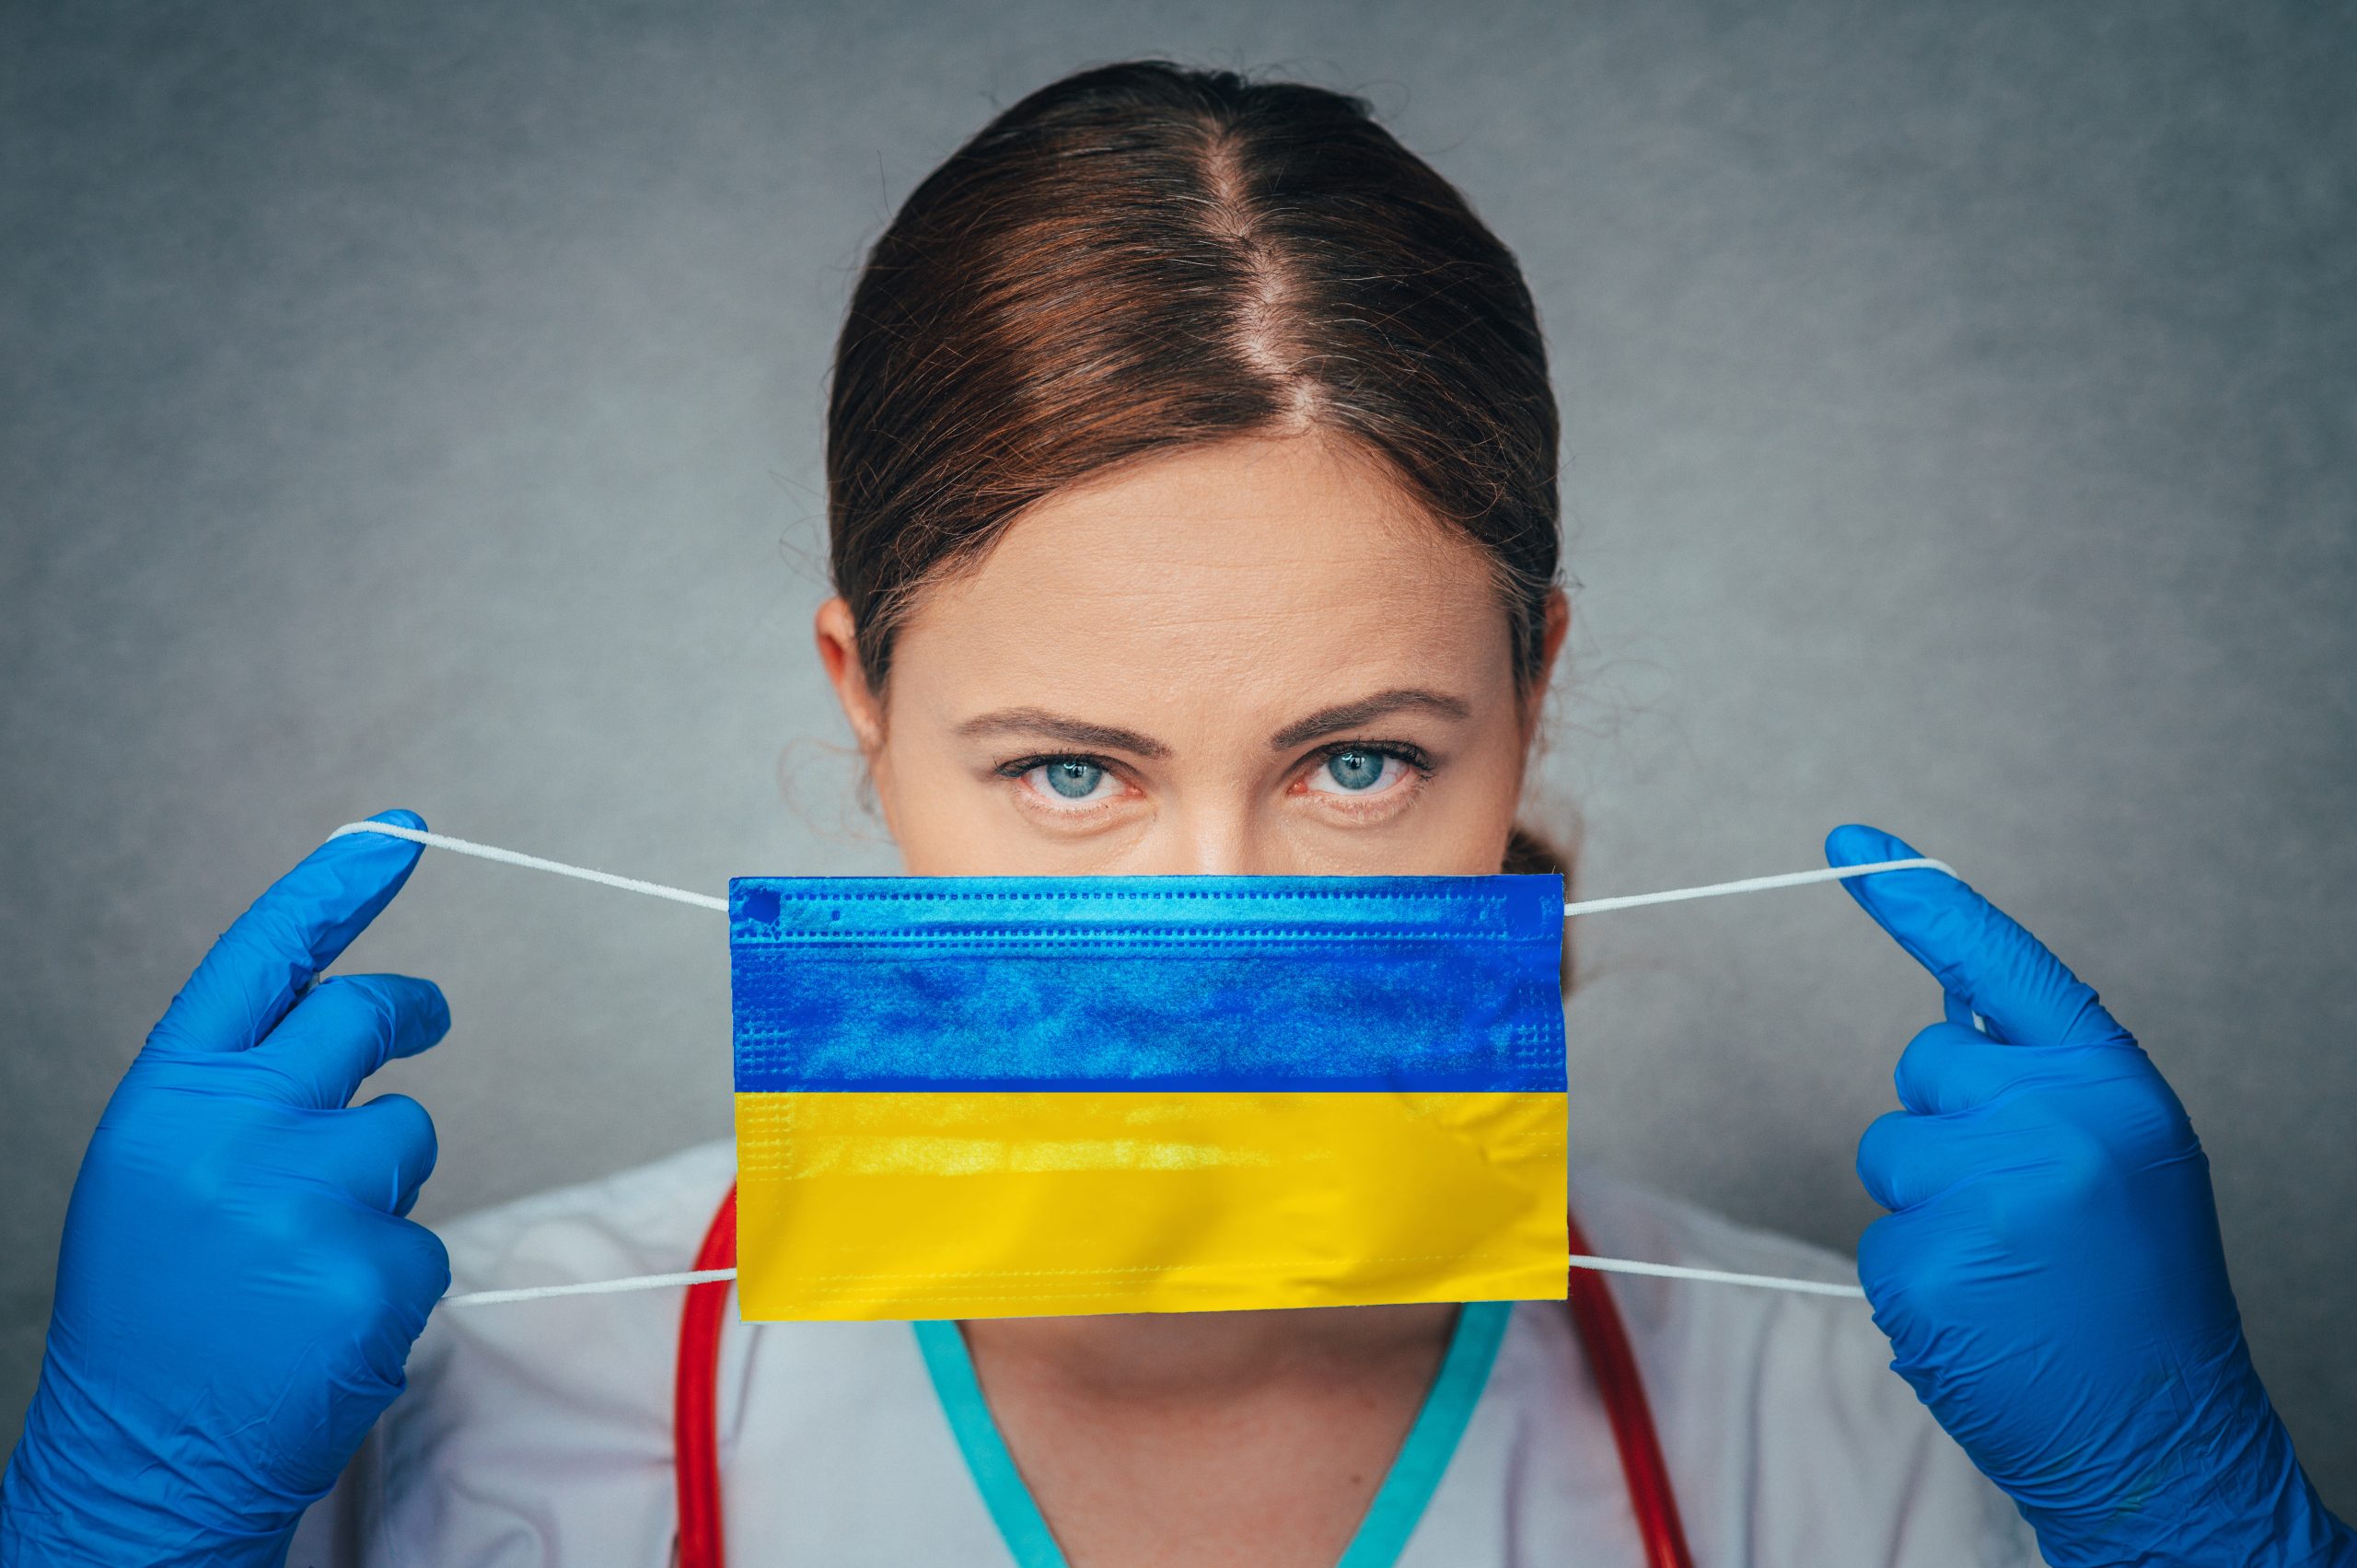 Vets mobilise to help Ukraine medical supply crisis